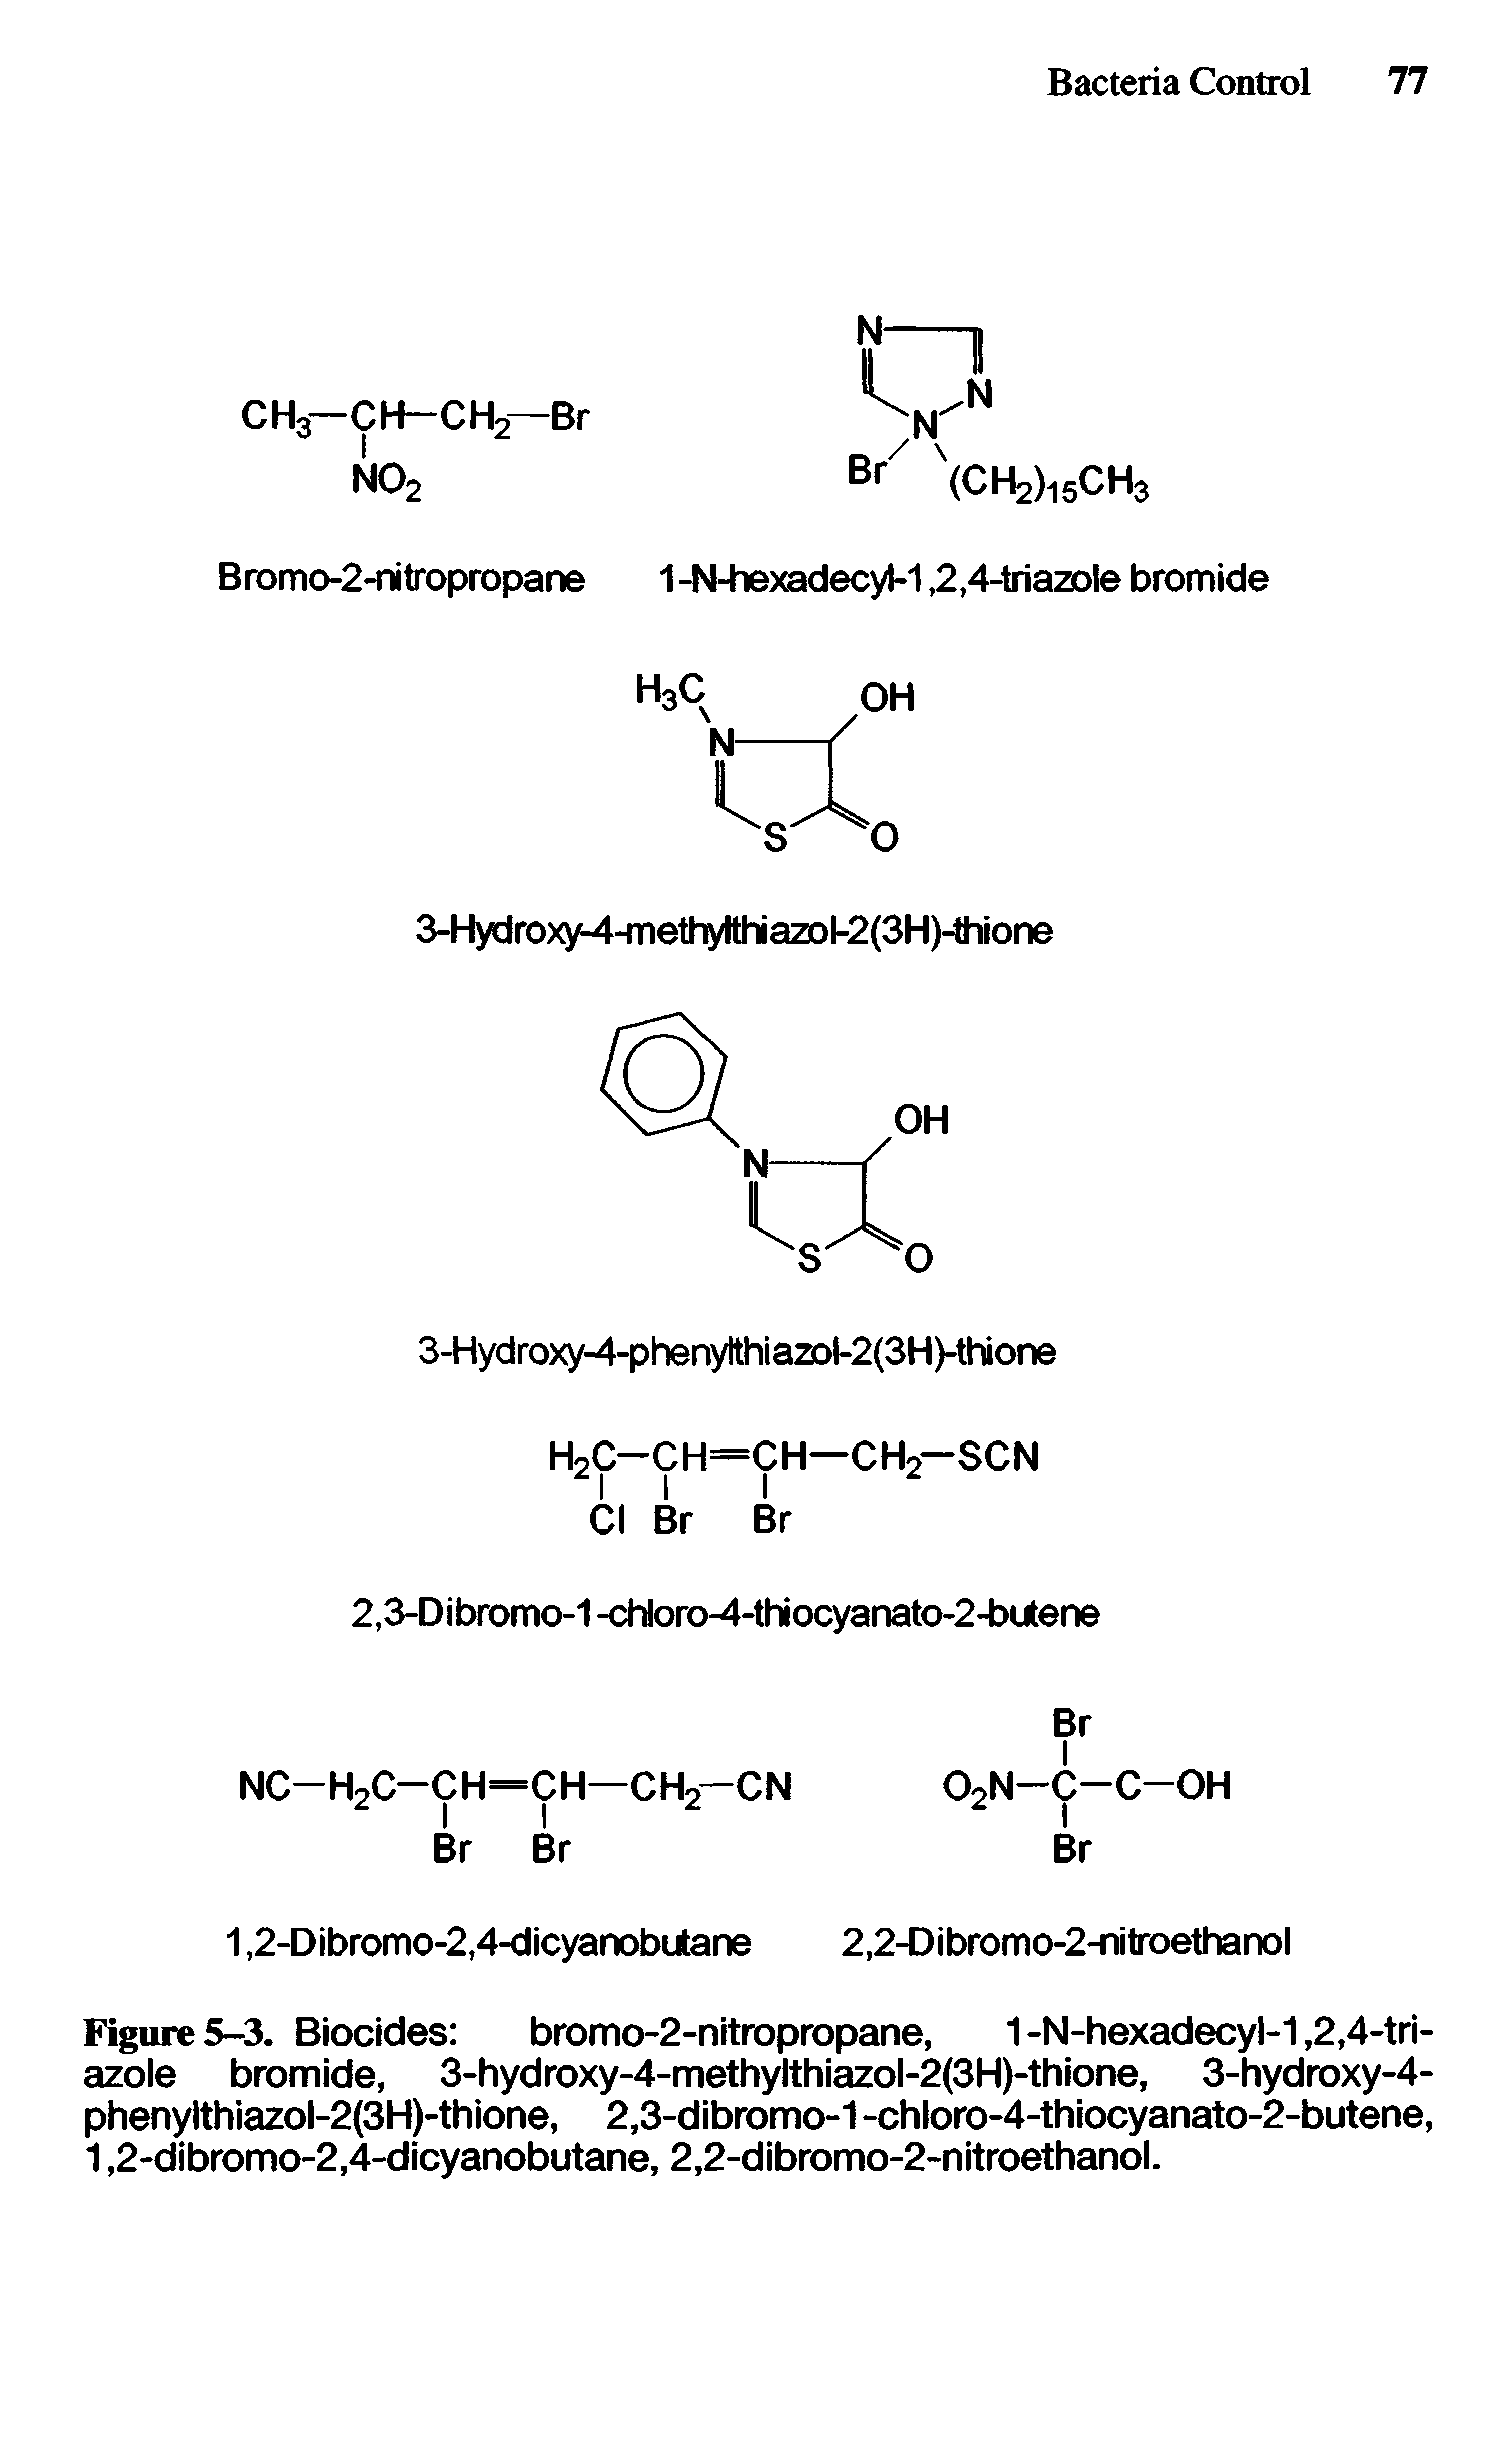 Figure 5-3. Biocides bromo-2-nitropropane, 1-N-hexadecyl-1,2,4-tri-azole bromide, 3-hydroxy-4-methylthiazol-2(3H)-thione, 3-hydroxy-4-phenylthiazol-2(3H)-thione, 2,3-dibromo-1-chloro-4-thiocyanato-2-butene, 1,2-dibromo-2,4-dicyanobutane, 2,2-dibromo-2-nitroethanol.